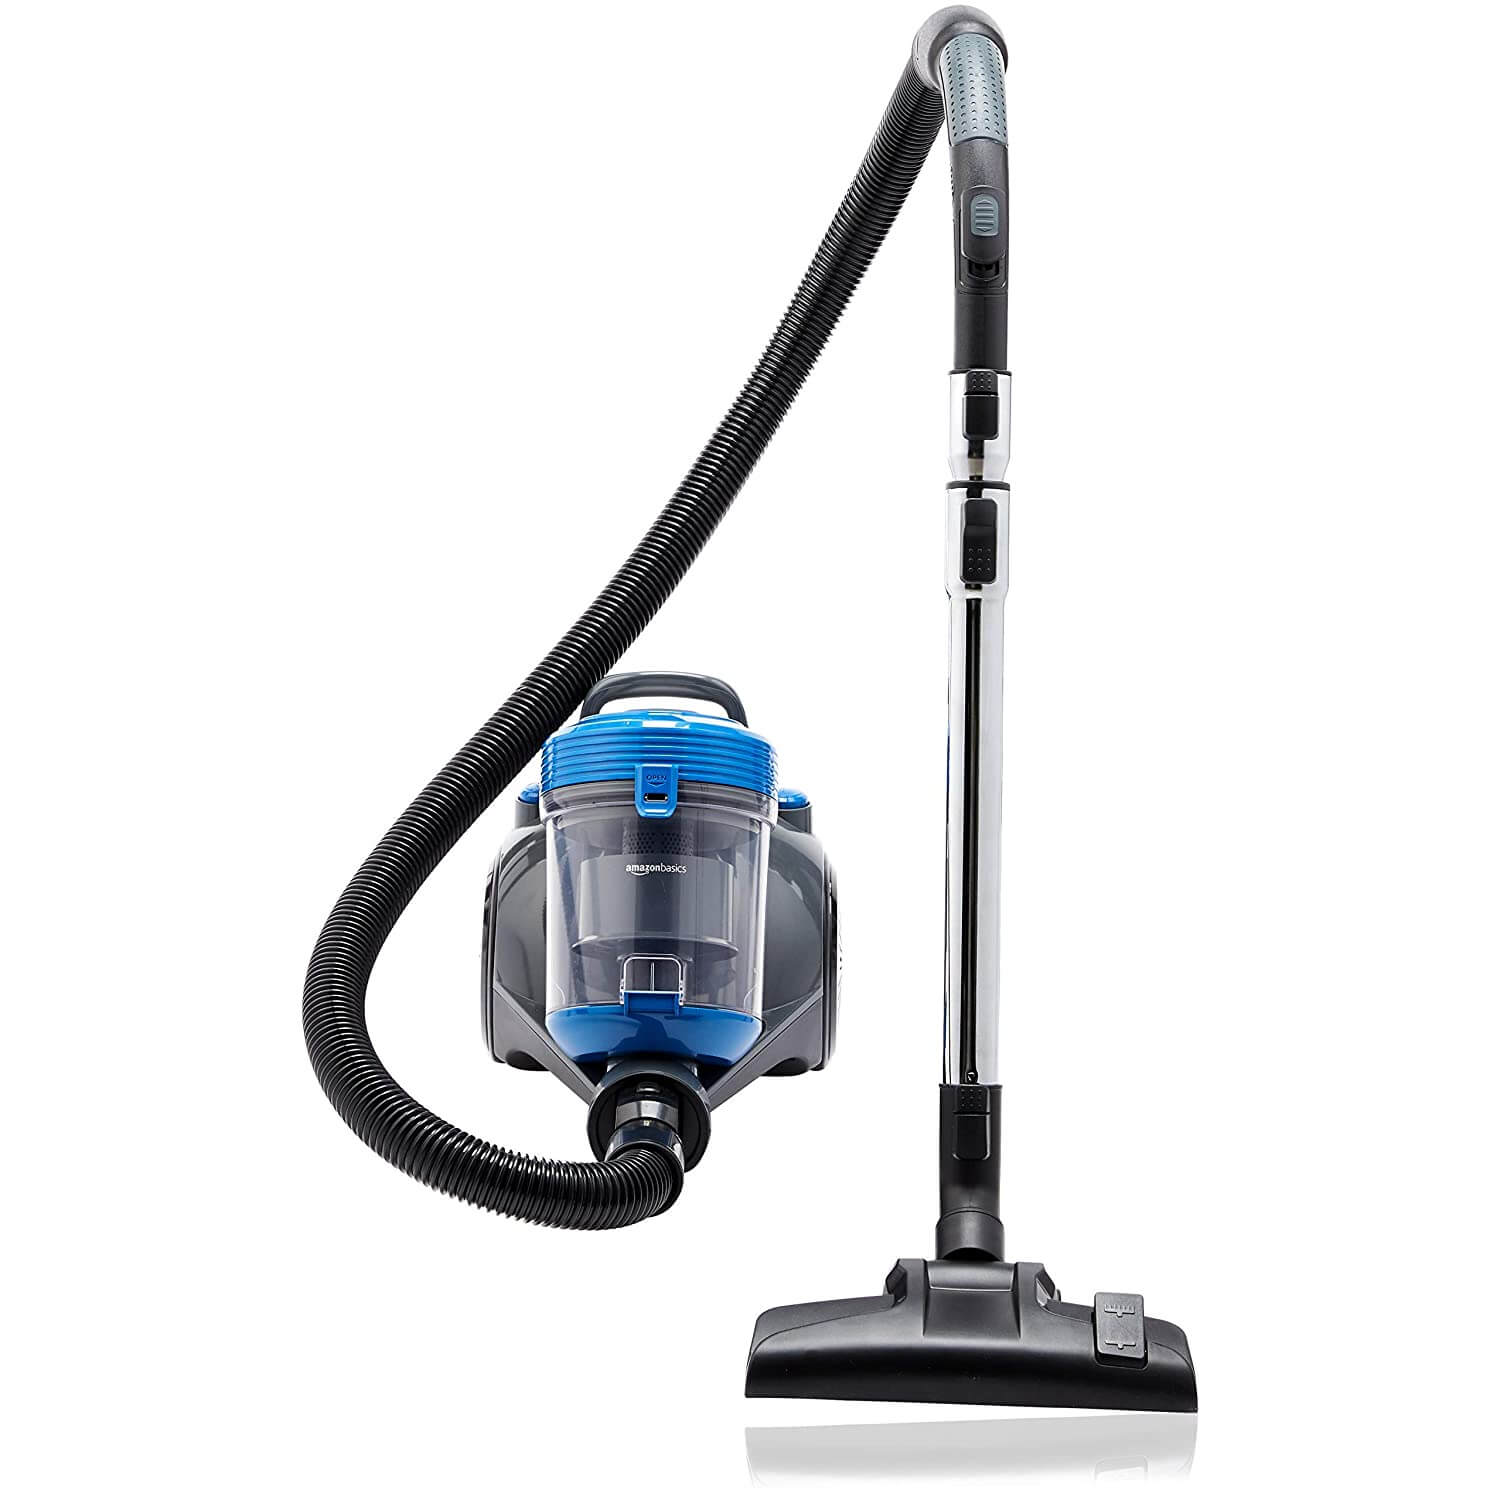 AmazonBasics vacuum cleaner (1)